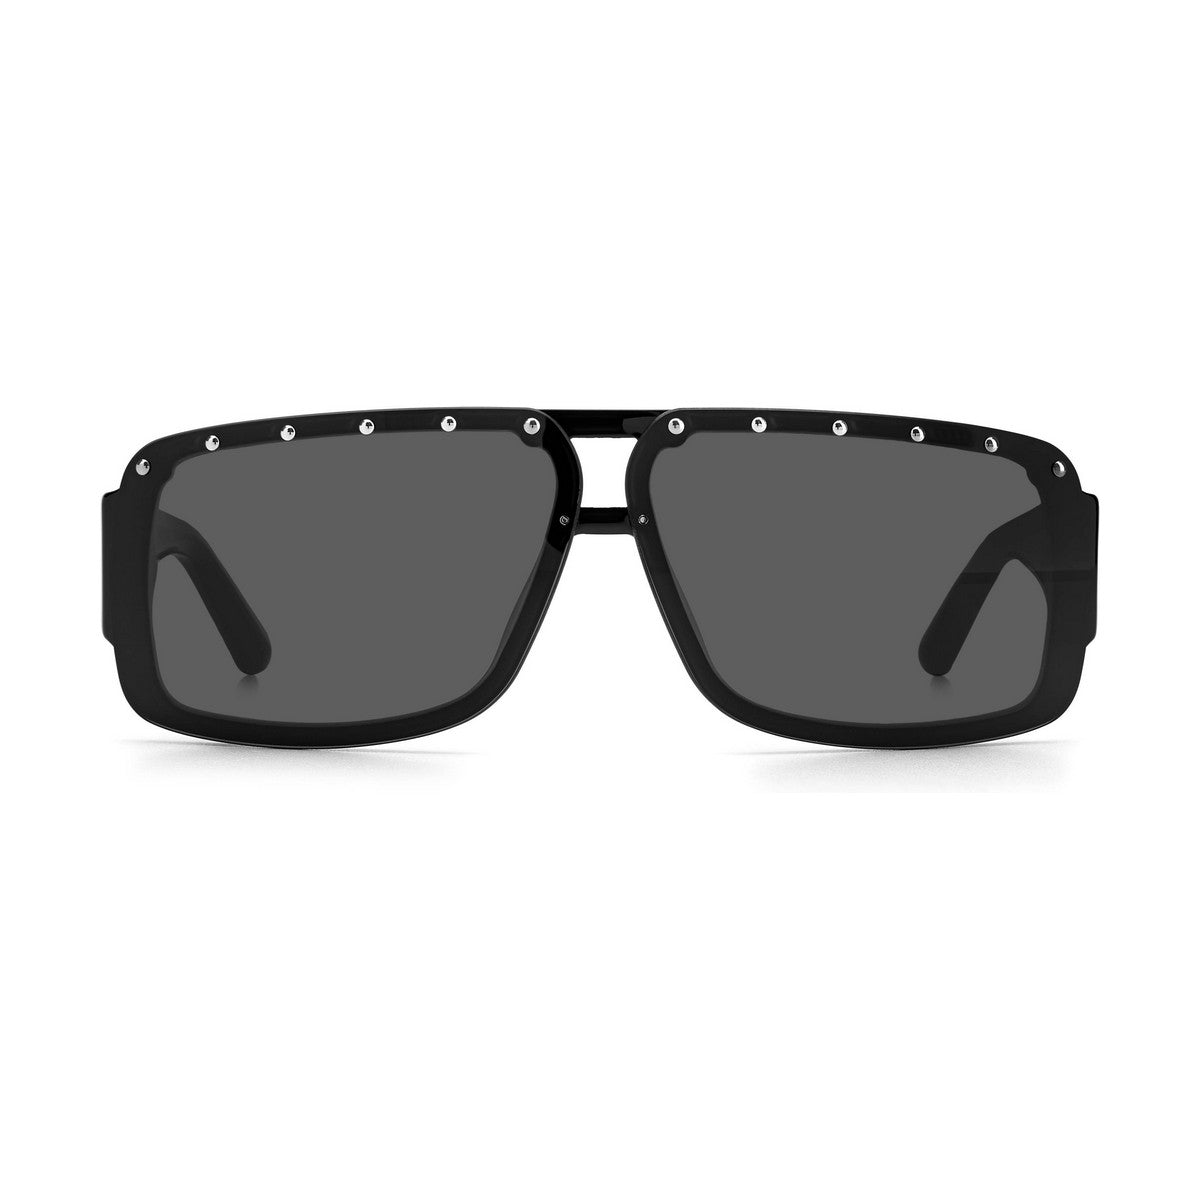 Kaufe Herrensonnenbrille Jimmy Choo MORRIS-S-807 ø 67 mm bei AWK Flagship um € 125.00